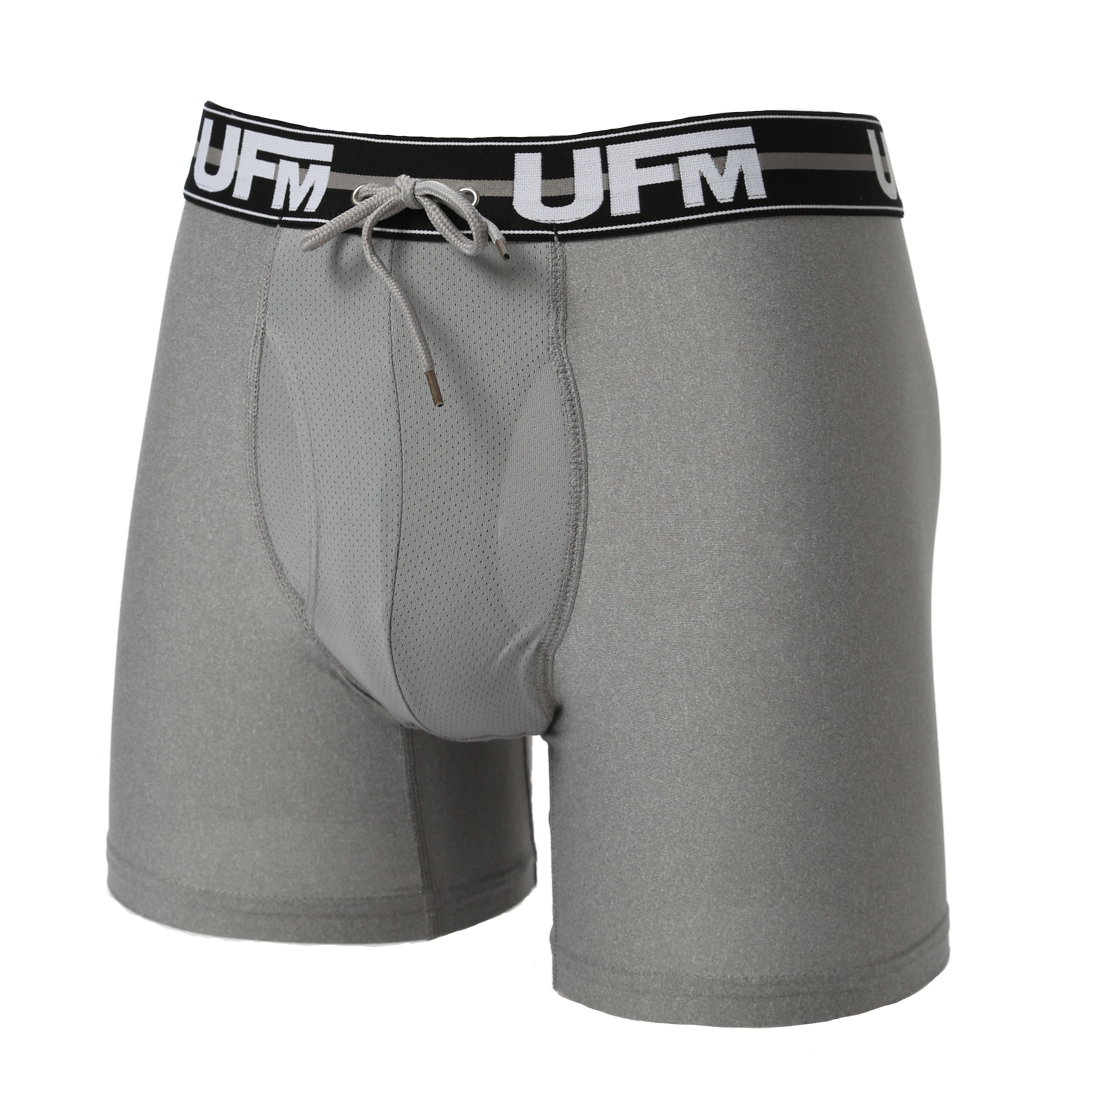 Parent UFM Underwear for Men Sport Polyester 6 inch Original Max Boxer Brief Gray 800